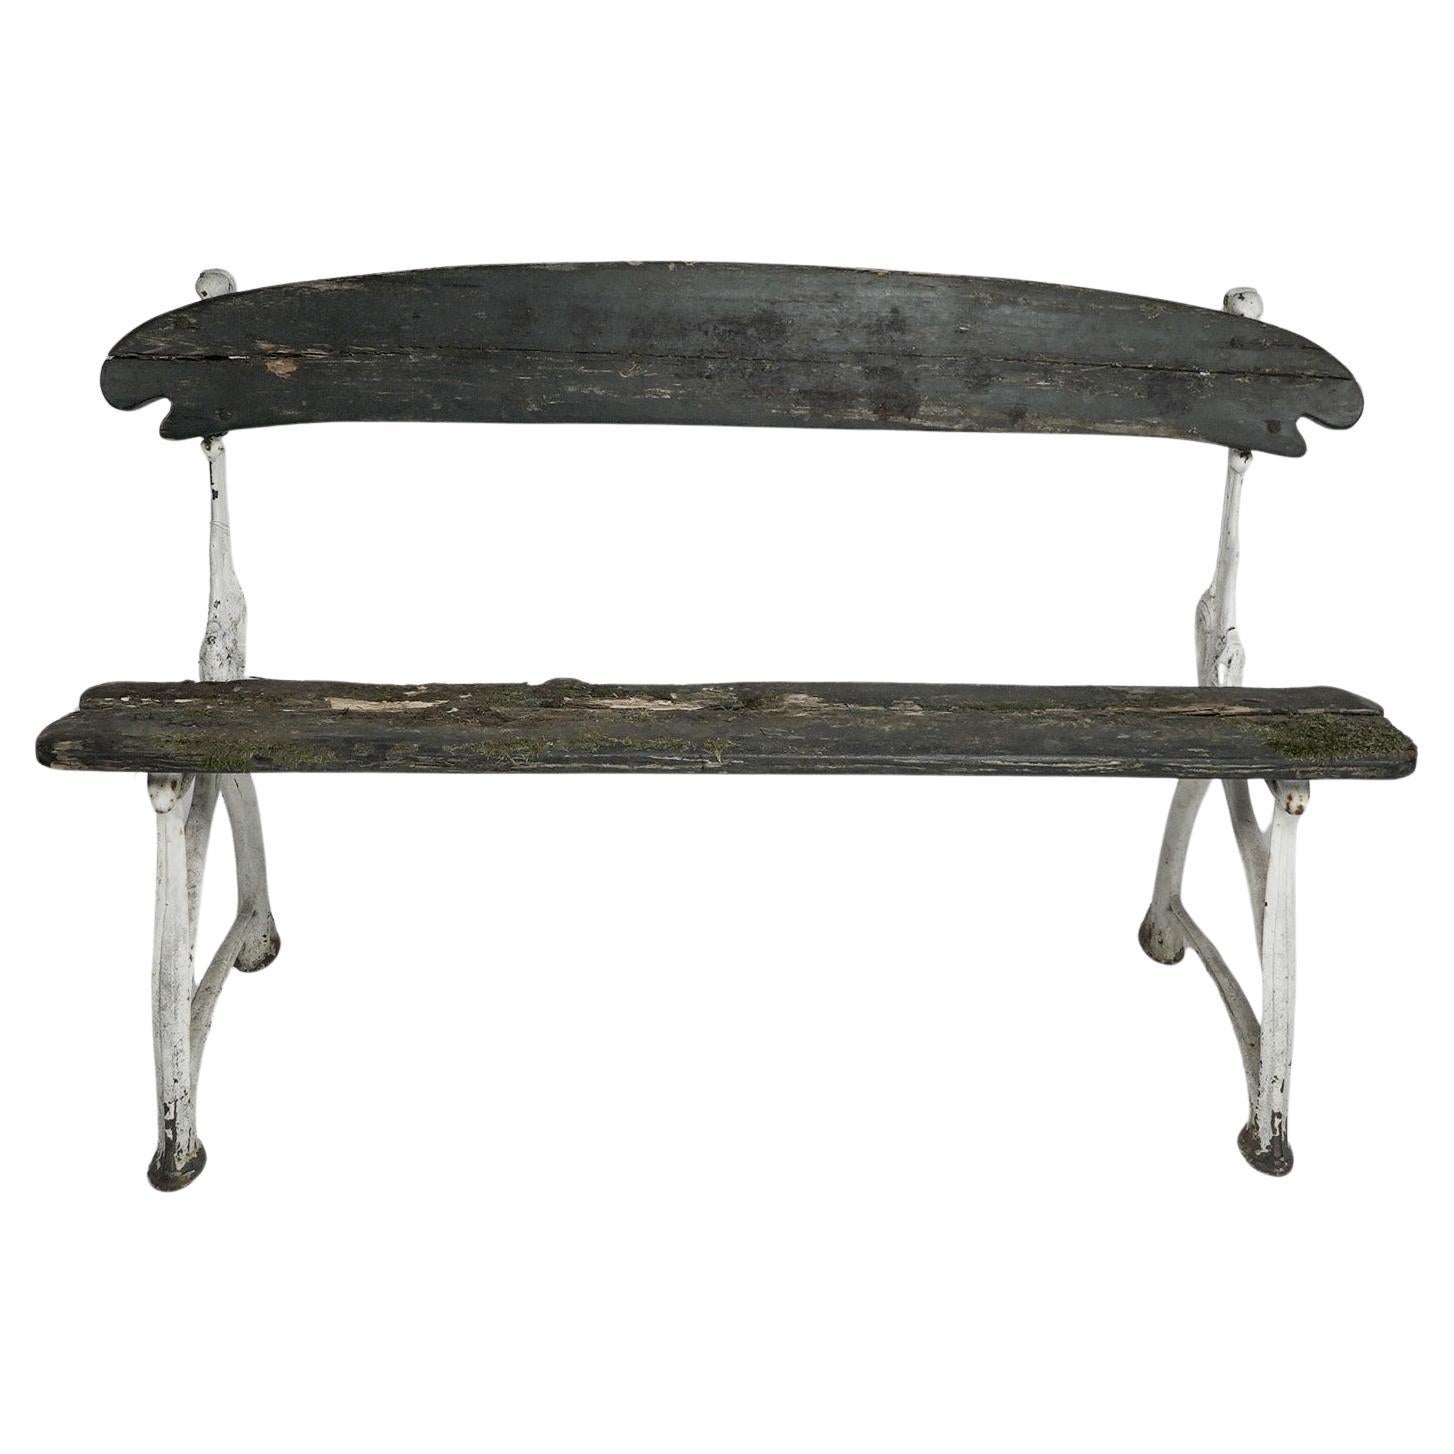 Hector Guimard, Garden bench, a rare example retaining its original wooden seat. For Sale